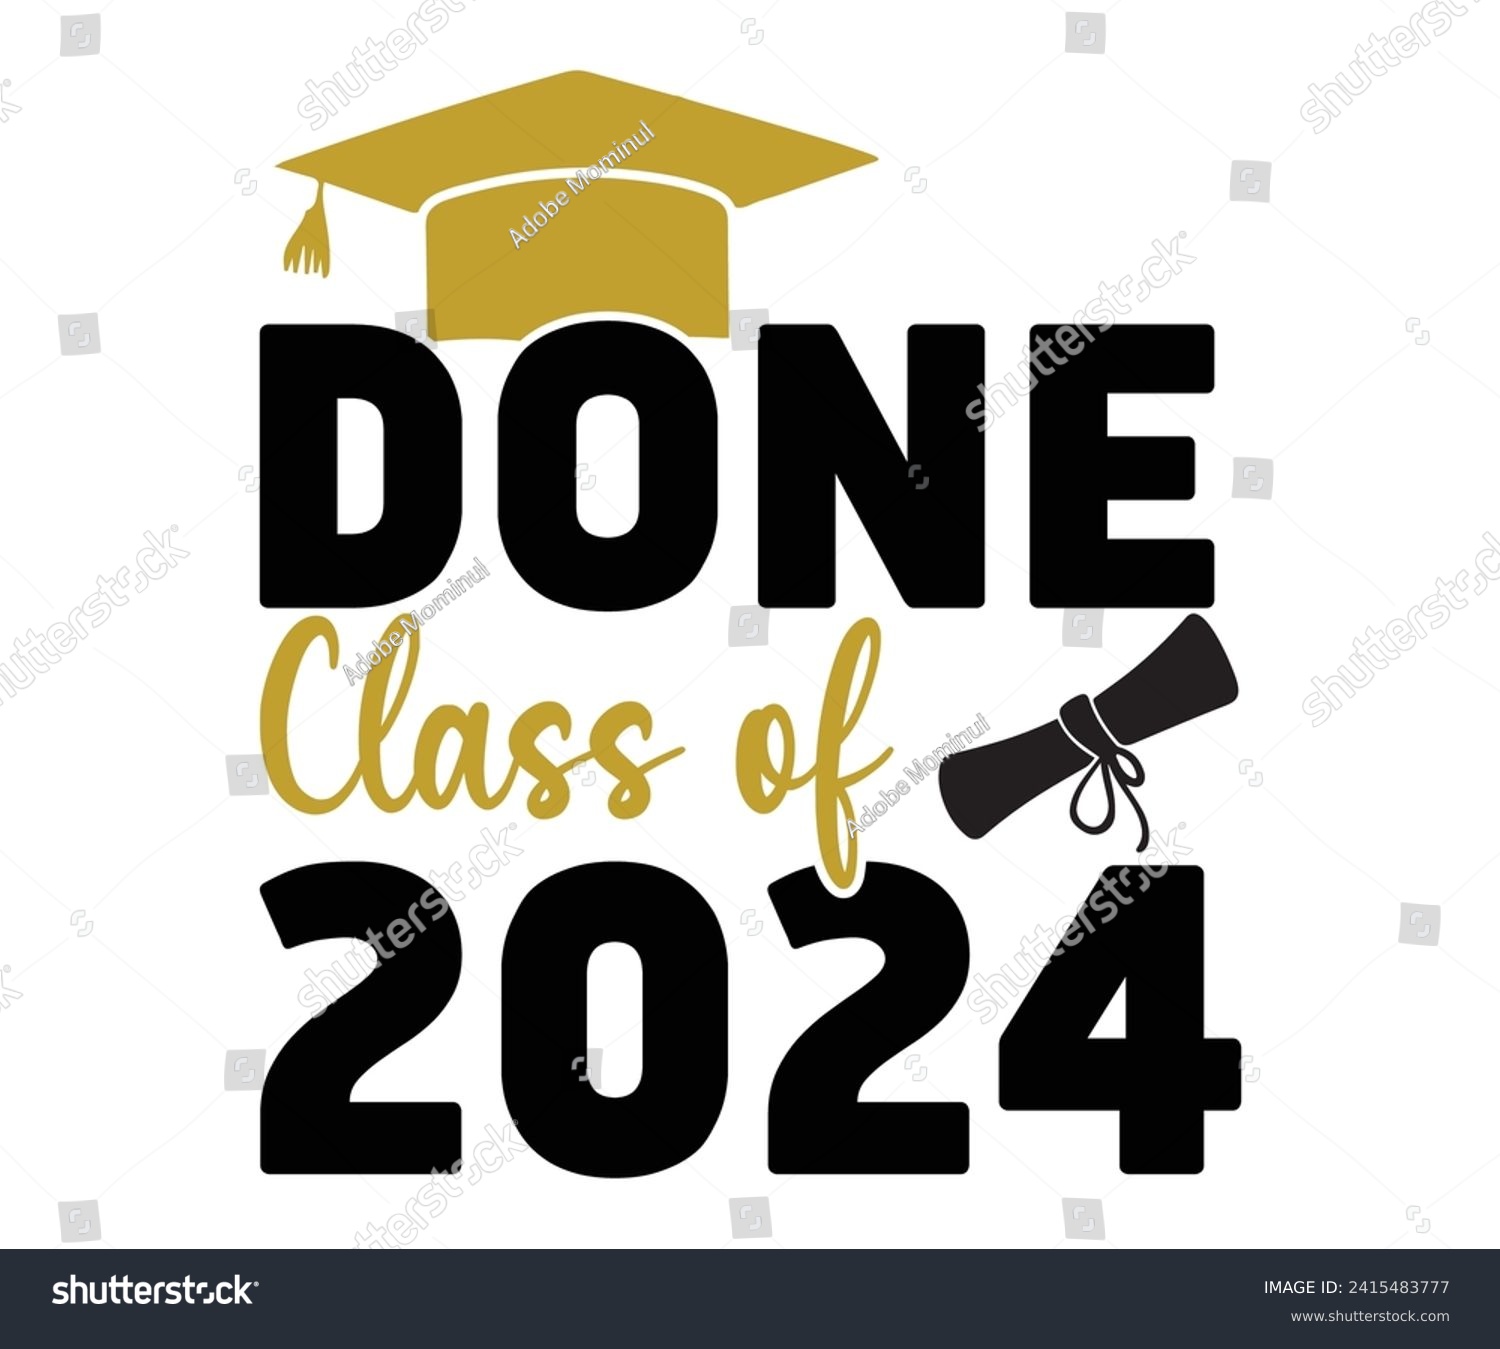 SVG of Done Class Of 2024,Graduation Svg,Senior Svg,Graduate  shirt,Graduation cap,Graduation 2024 Shirt,Family Graduation Svg,Pre-K Grad Shirt,Graduation Qoutes,Graduation Gift Shirt,Cut File,Groovy, svg